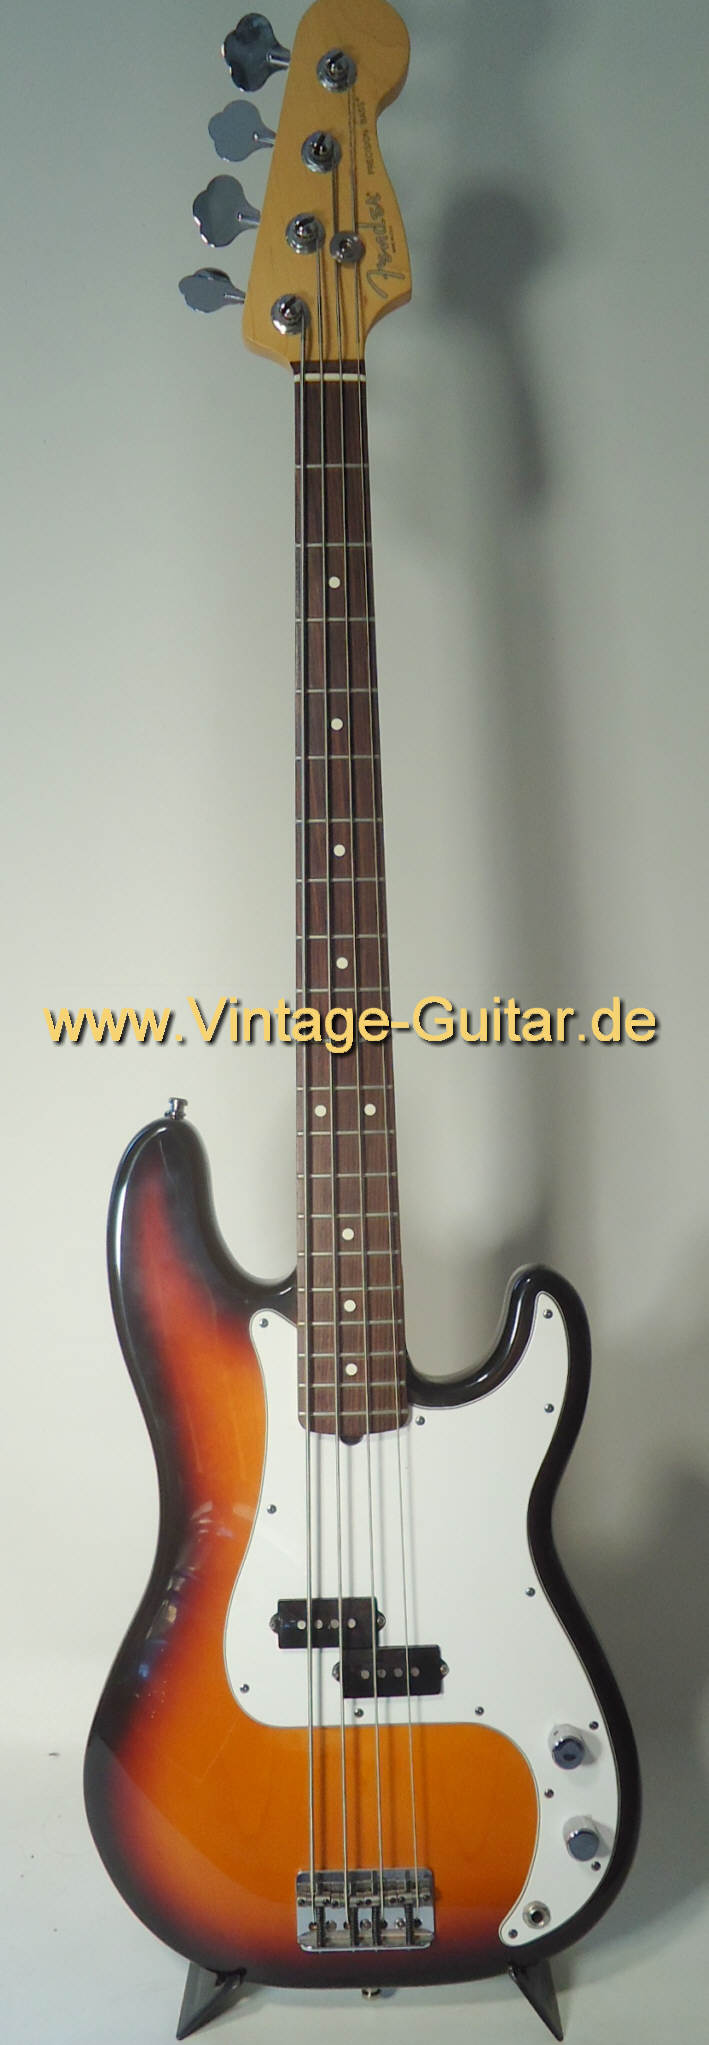 Fender-Precision-Bass-1995-sunburst-a.jpg